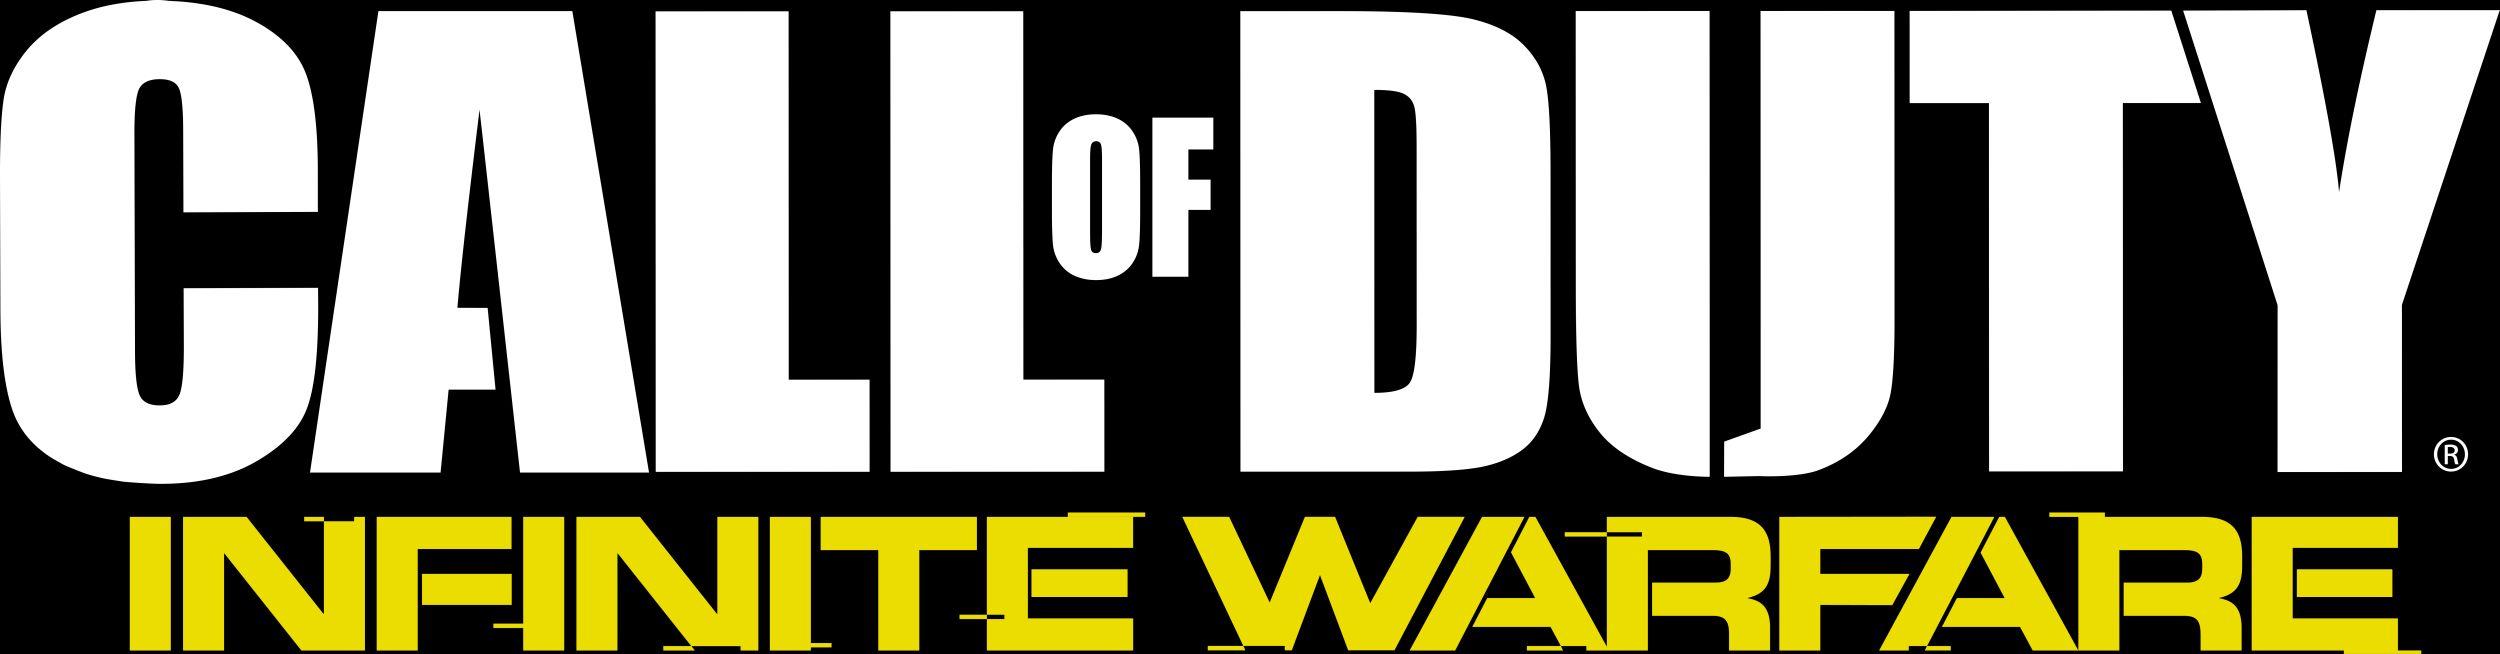 PG LOGO VECTOR DARK 1462201425 Call of Duty: Infinite Warfare & Modern Warfare Remastered Announced